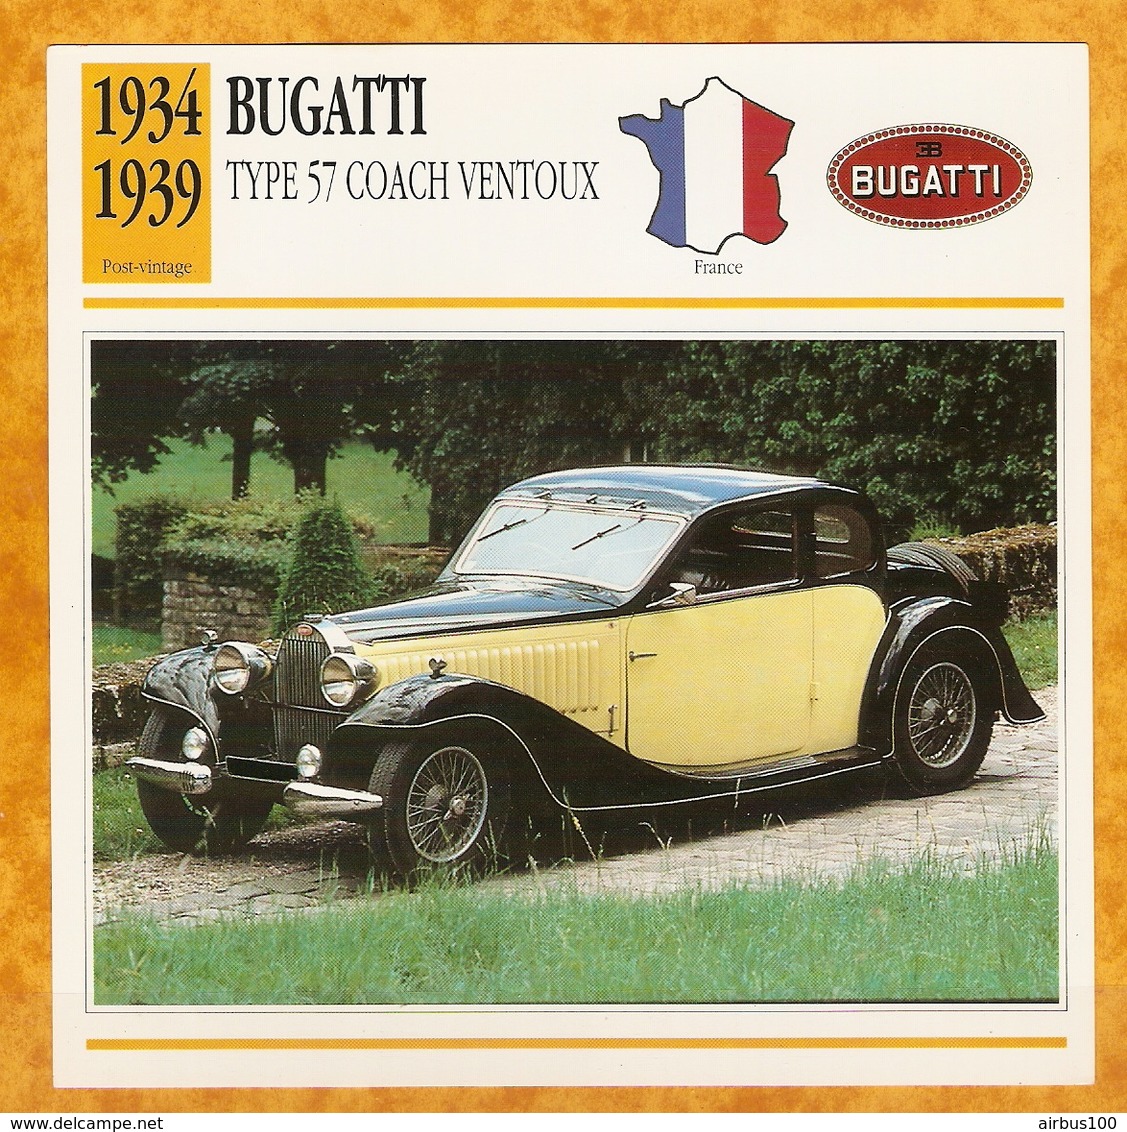 1934 FRANCE VIEILLE VOITURE BUGATTI TYPE 57 COACH VENTOUX - FRANCE OLD CAR - FRANCIA VIEJO COCHE - VECCHIA MACCHINA - Auto's